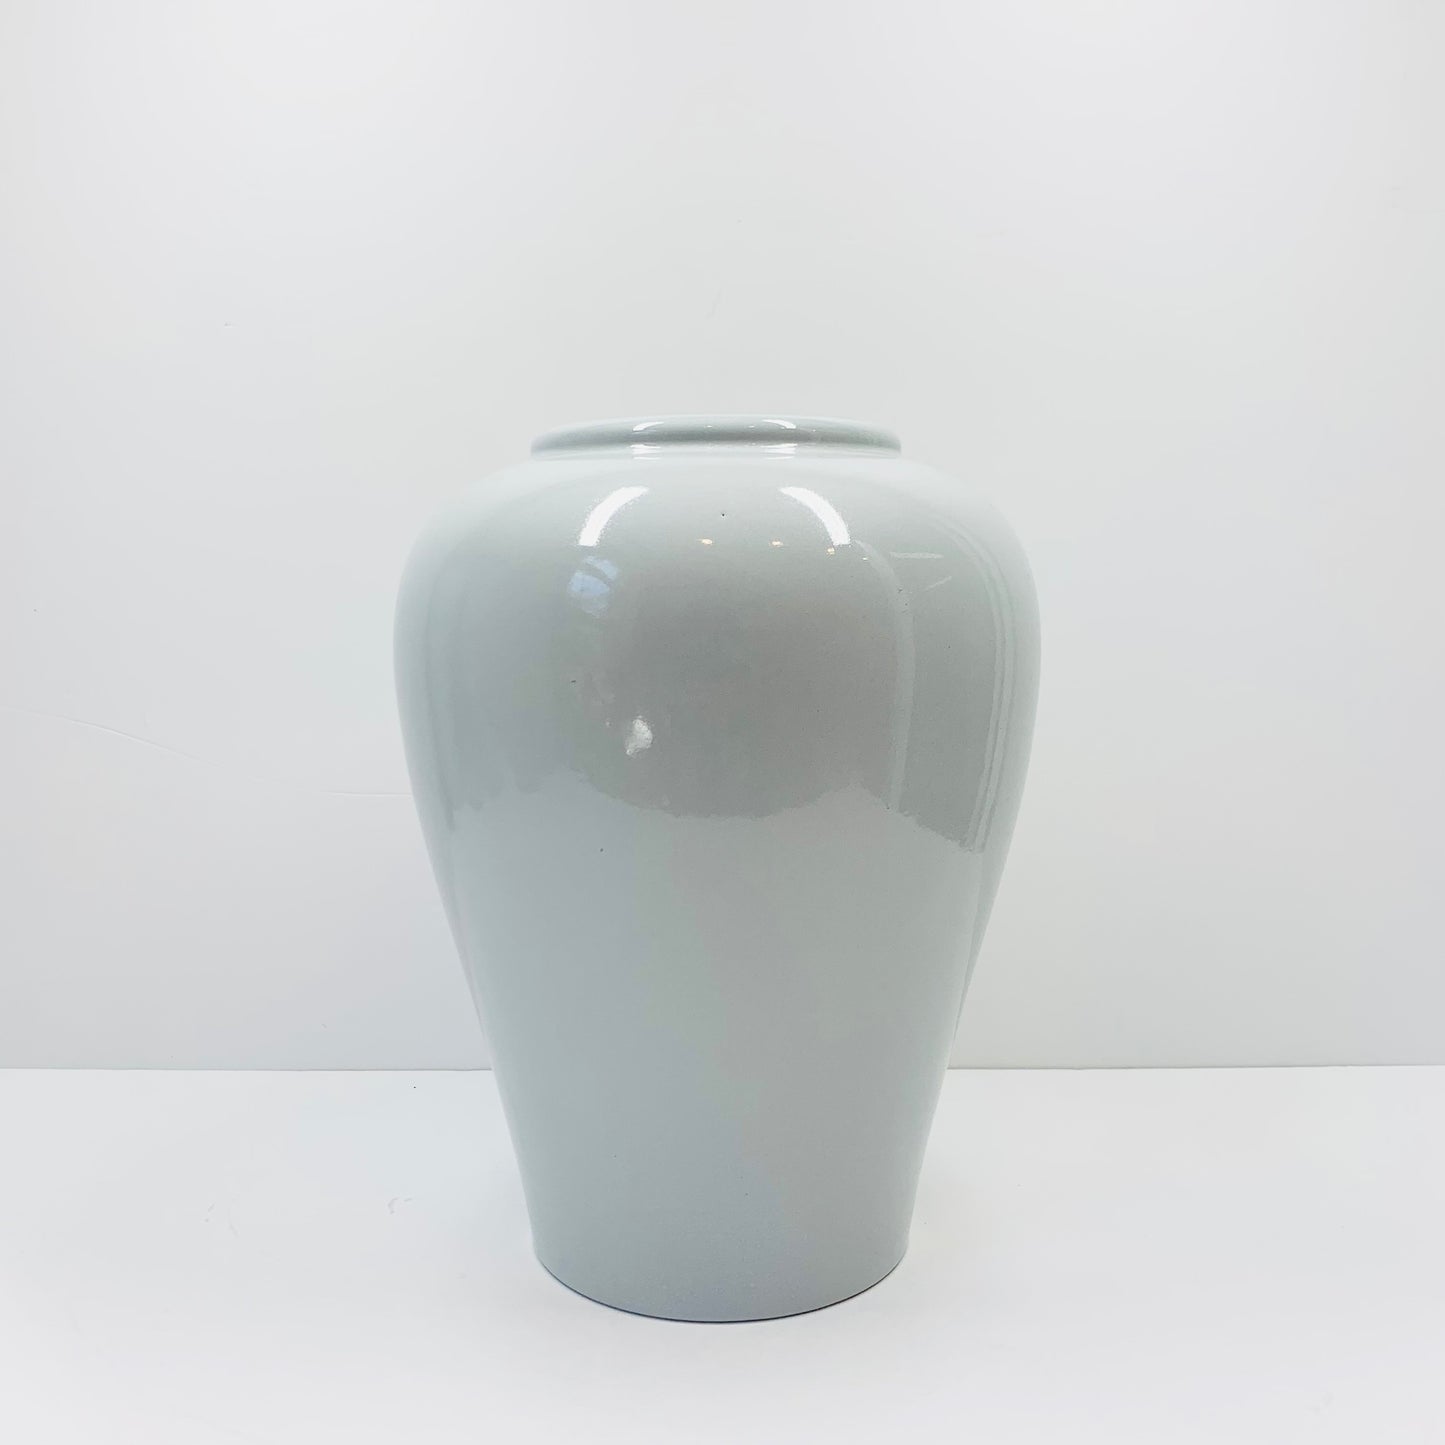 1970s West German light grey pottery vase